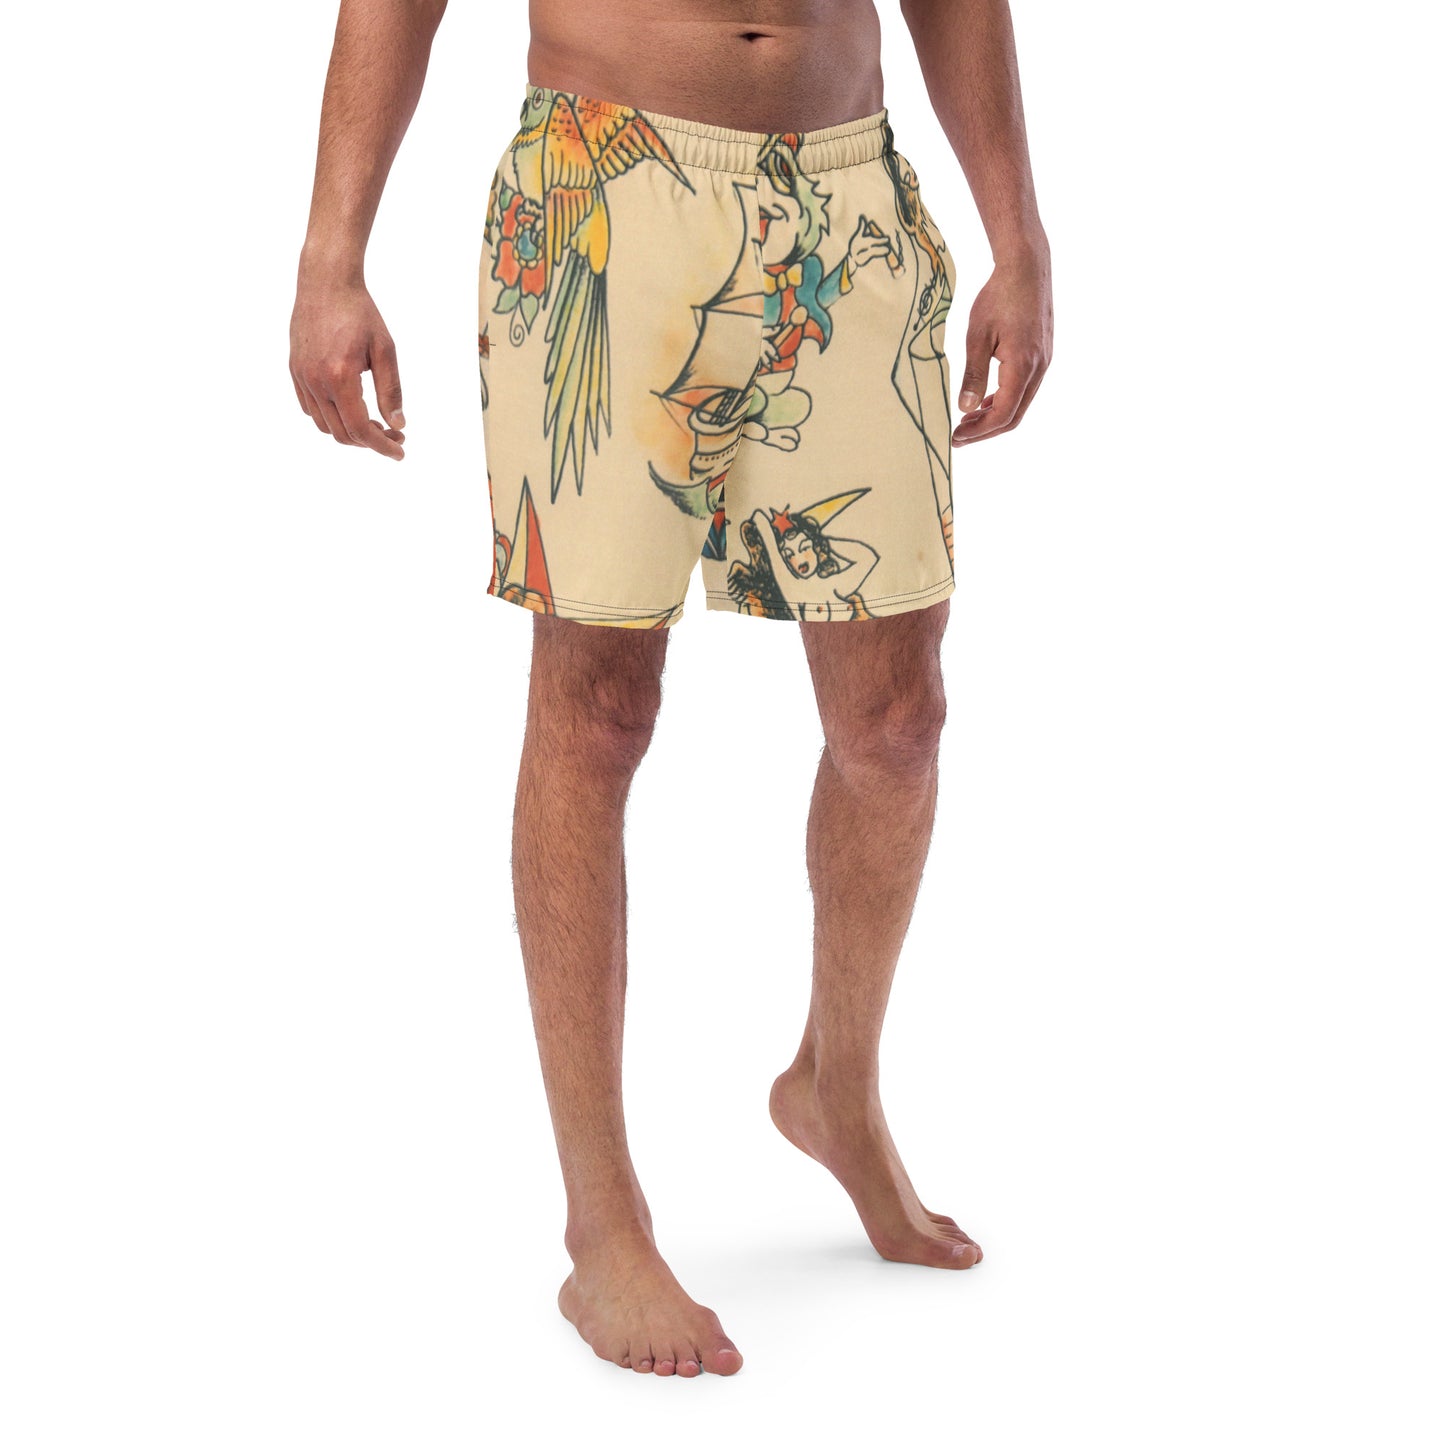 Tattoo Ole - Men's swim trunks